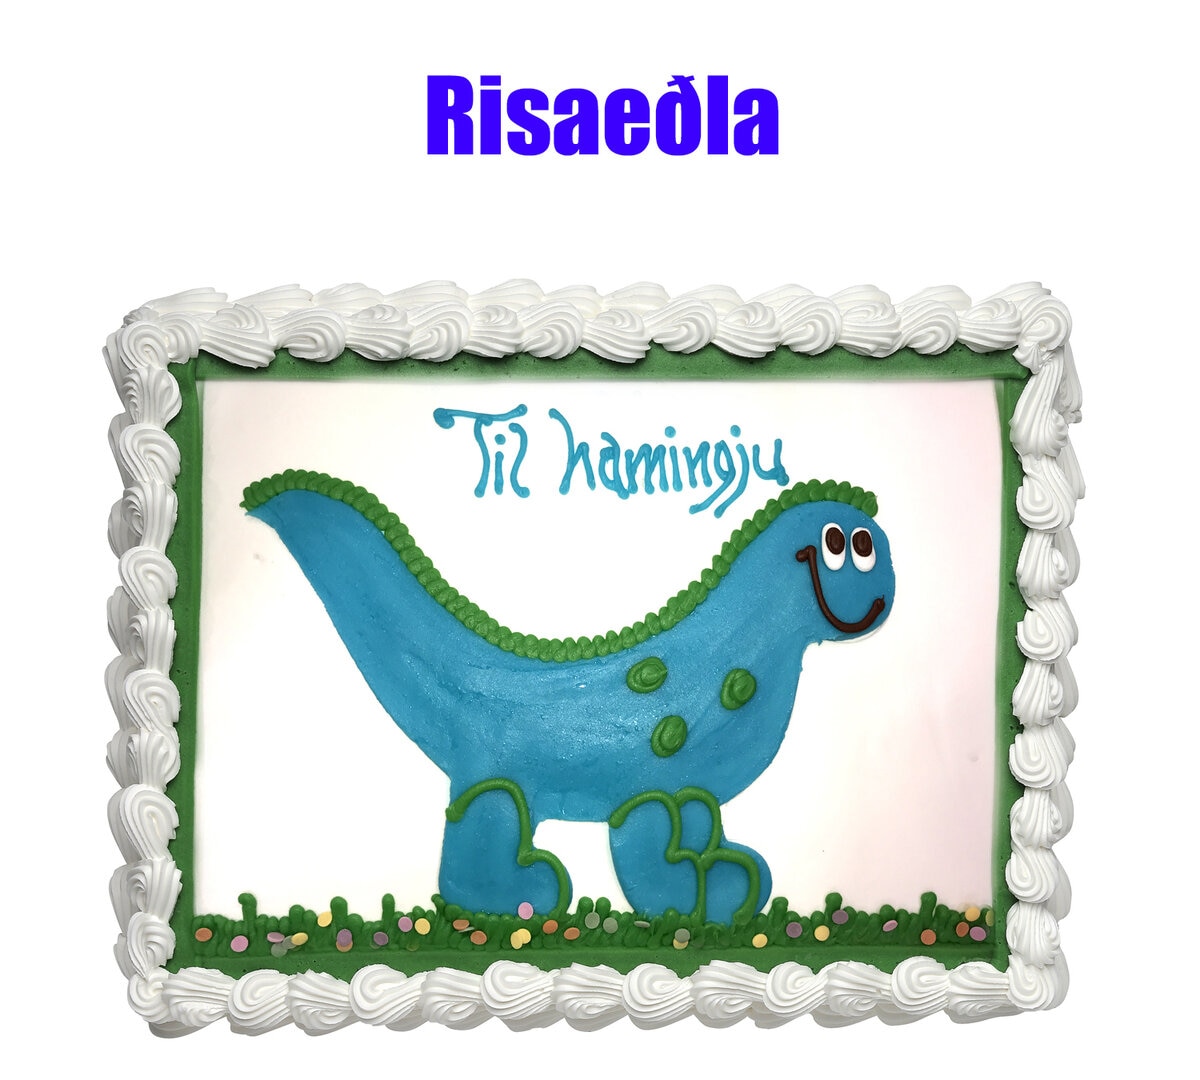 iceland Dinosaur cake